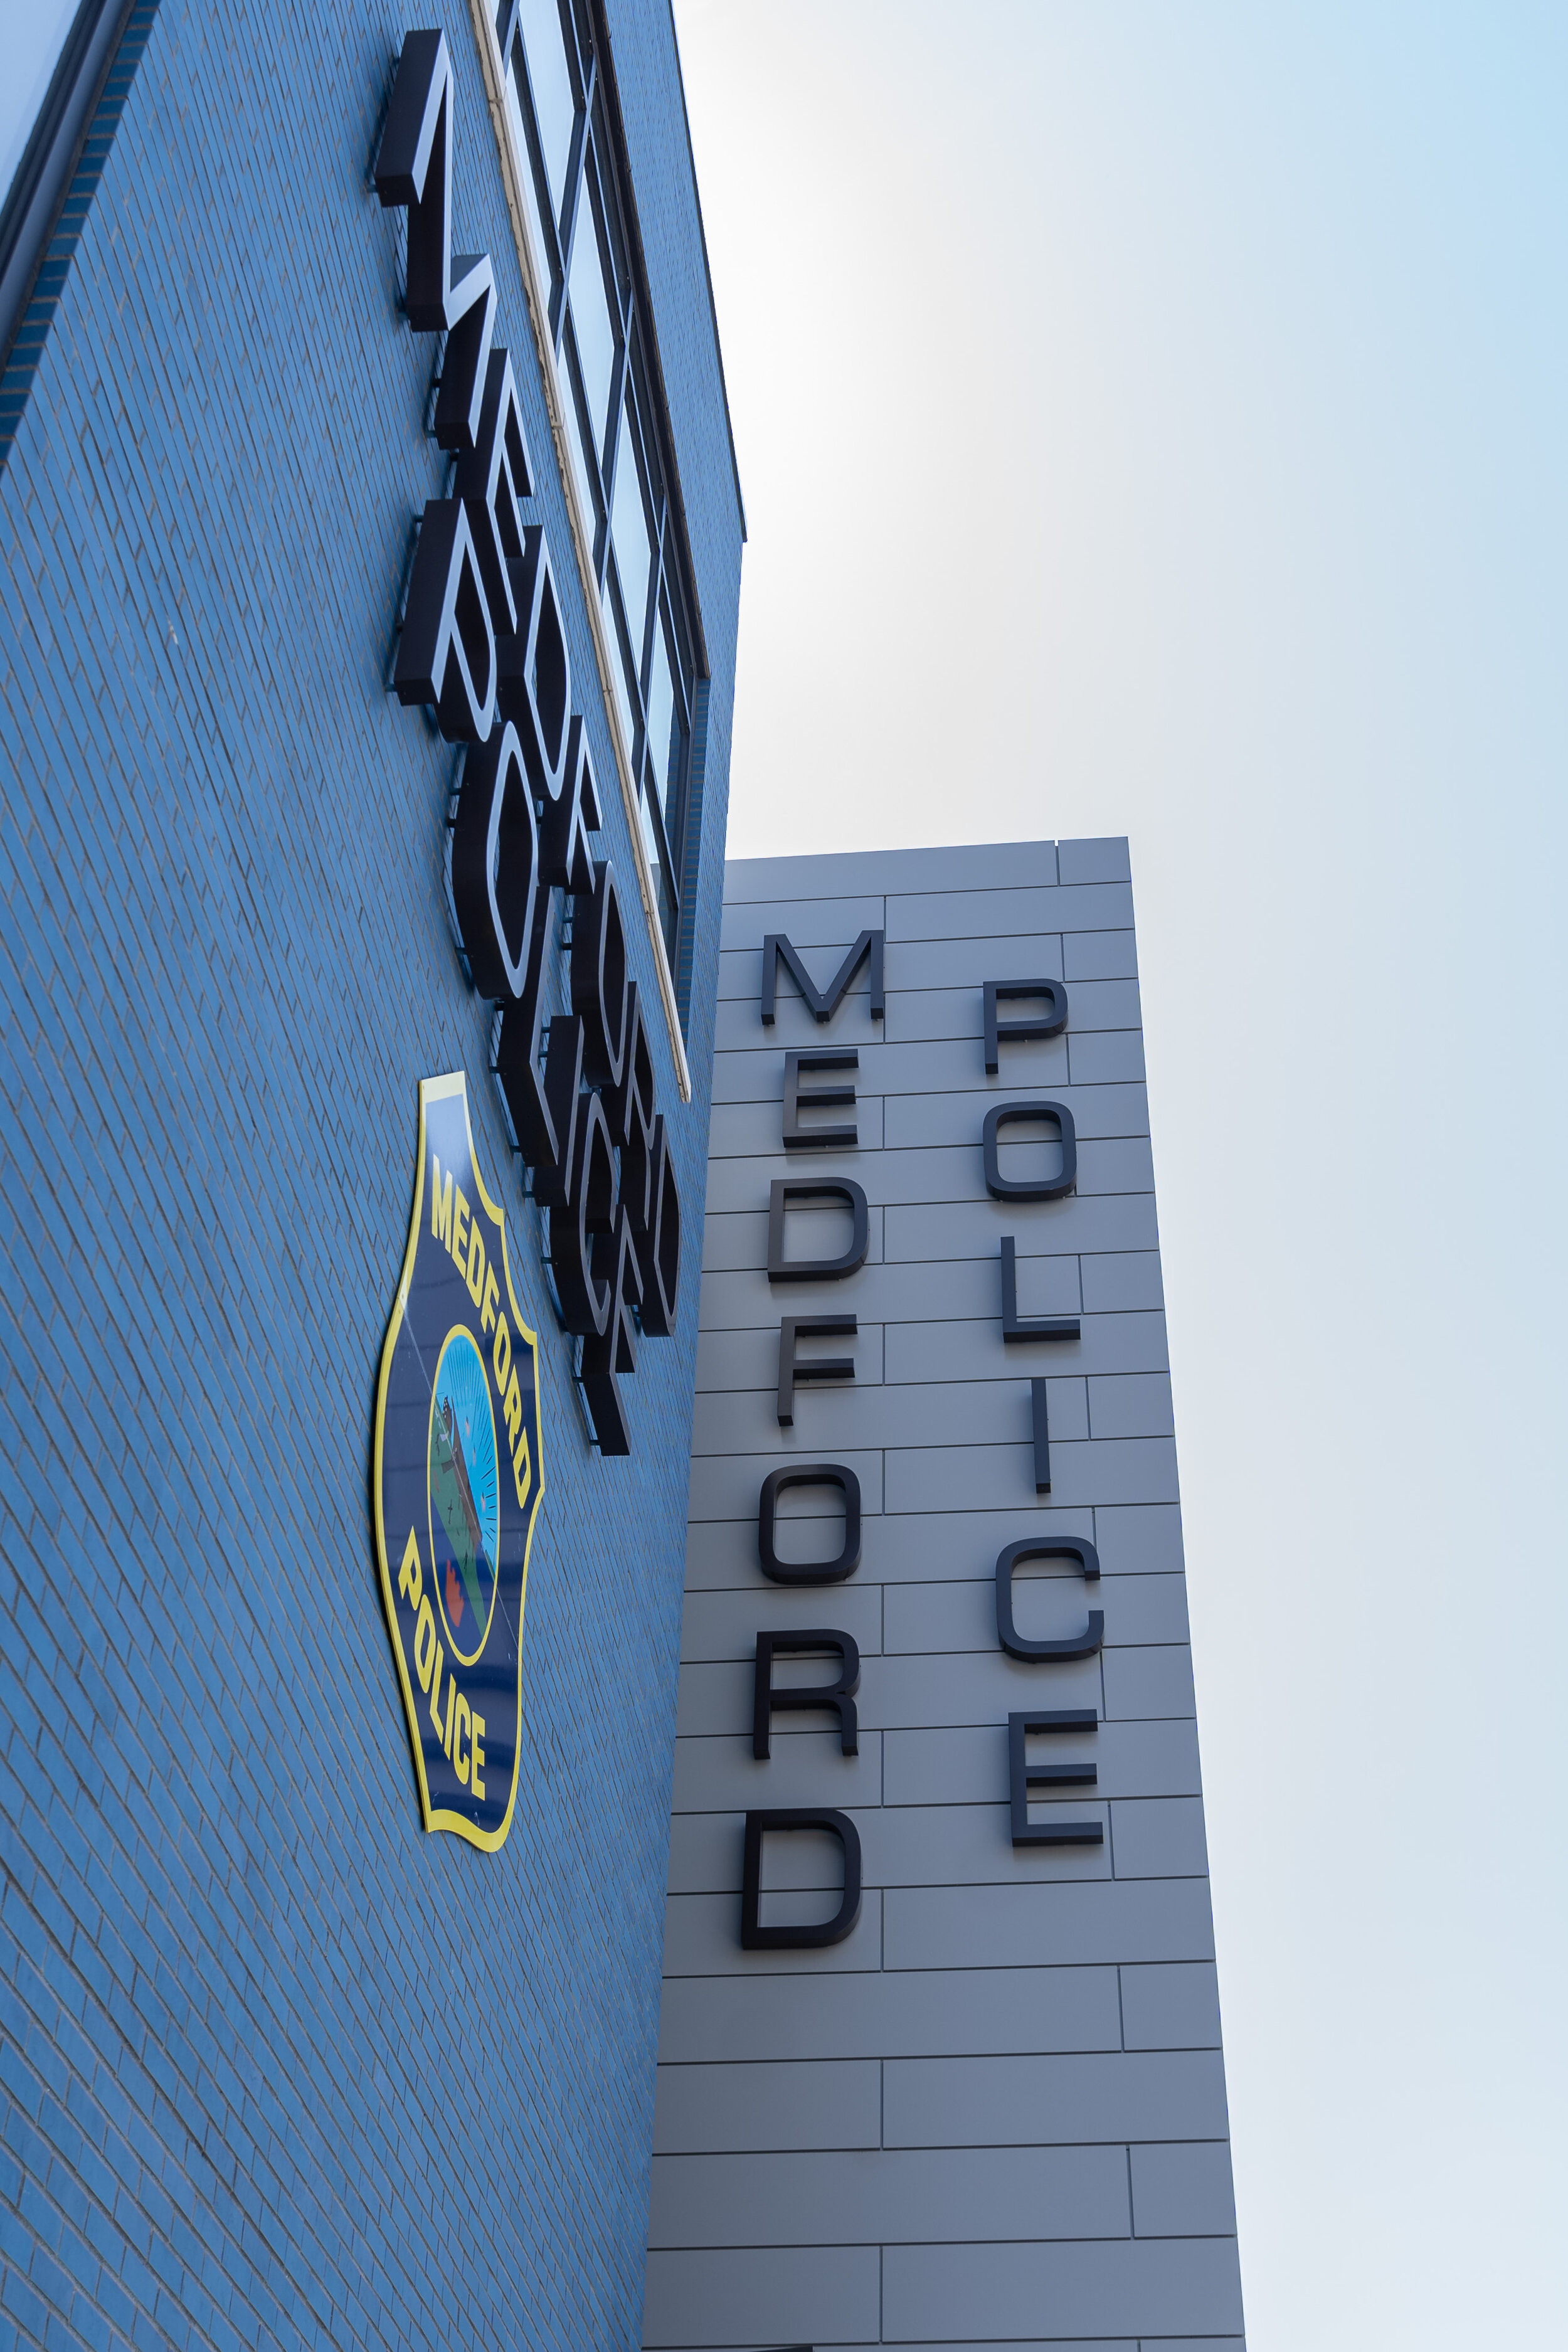 Bass-Medford Police Headquarters-22.jpg